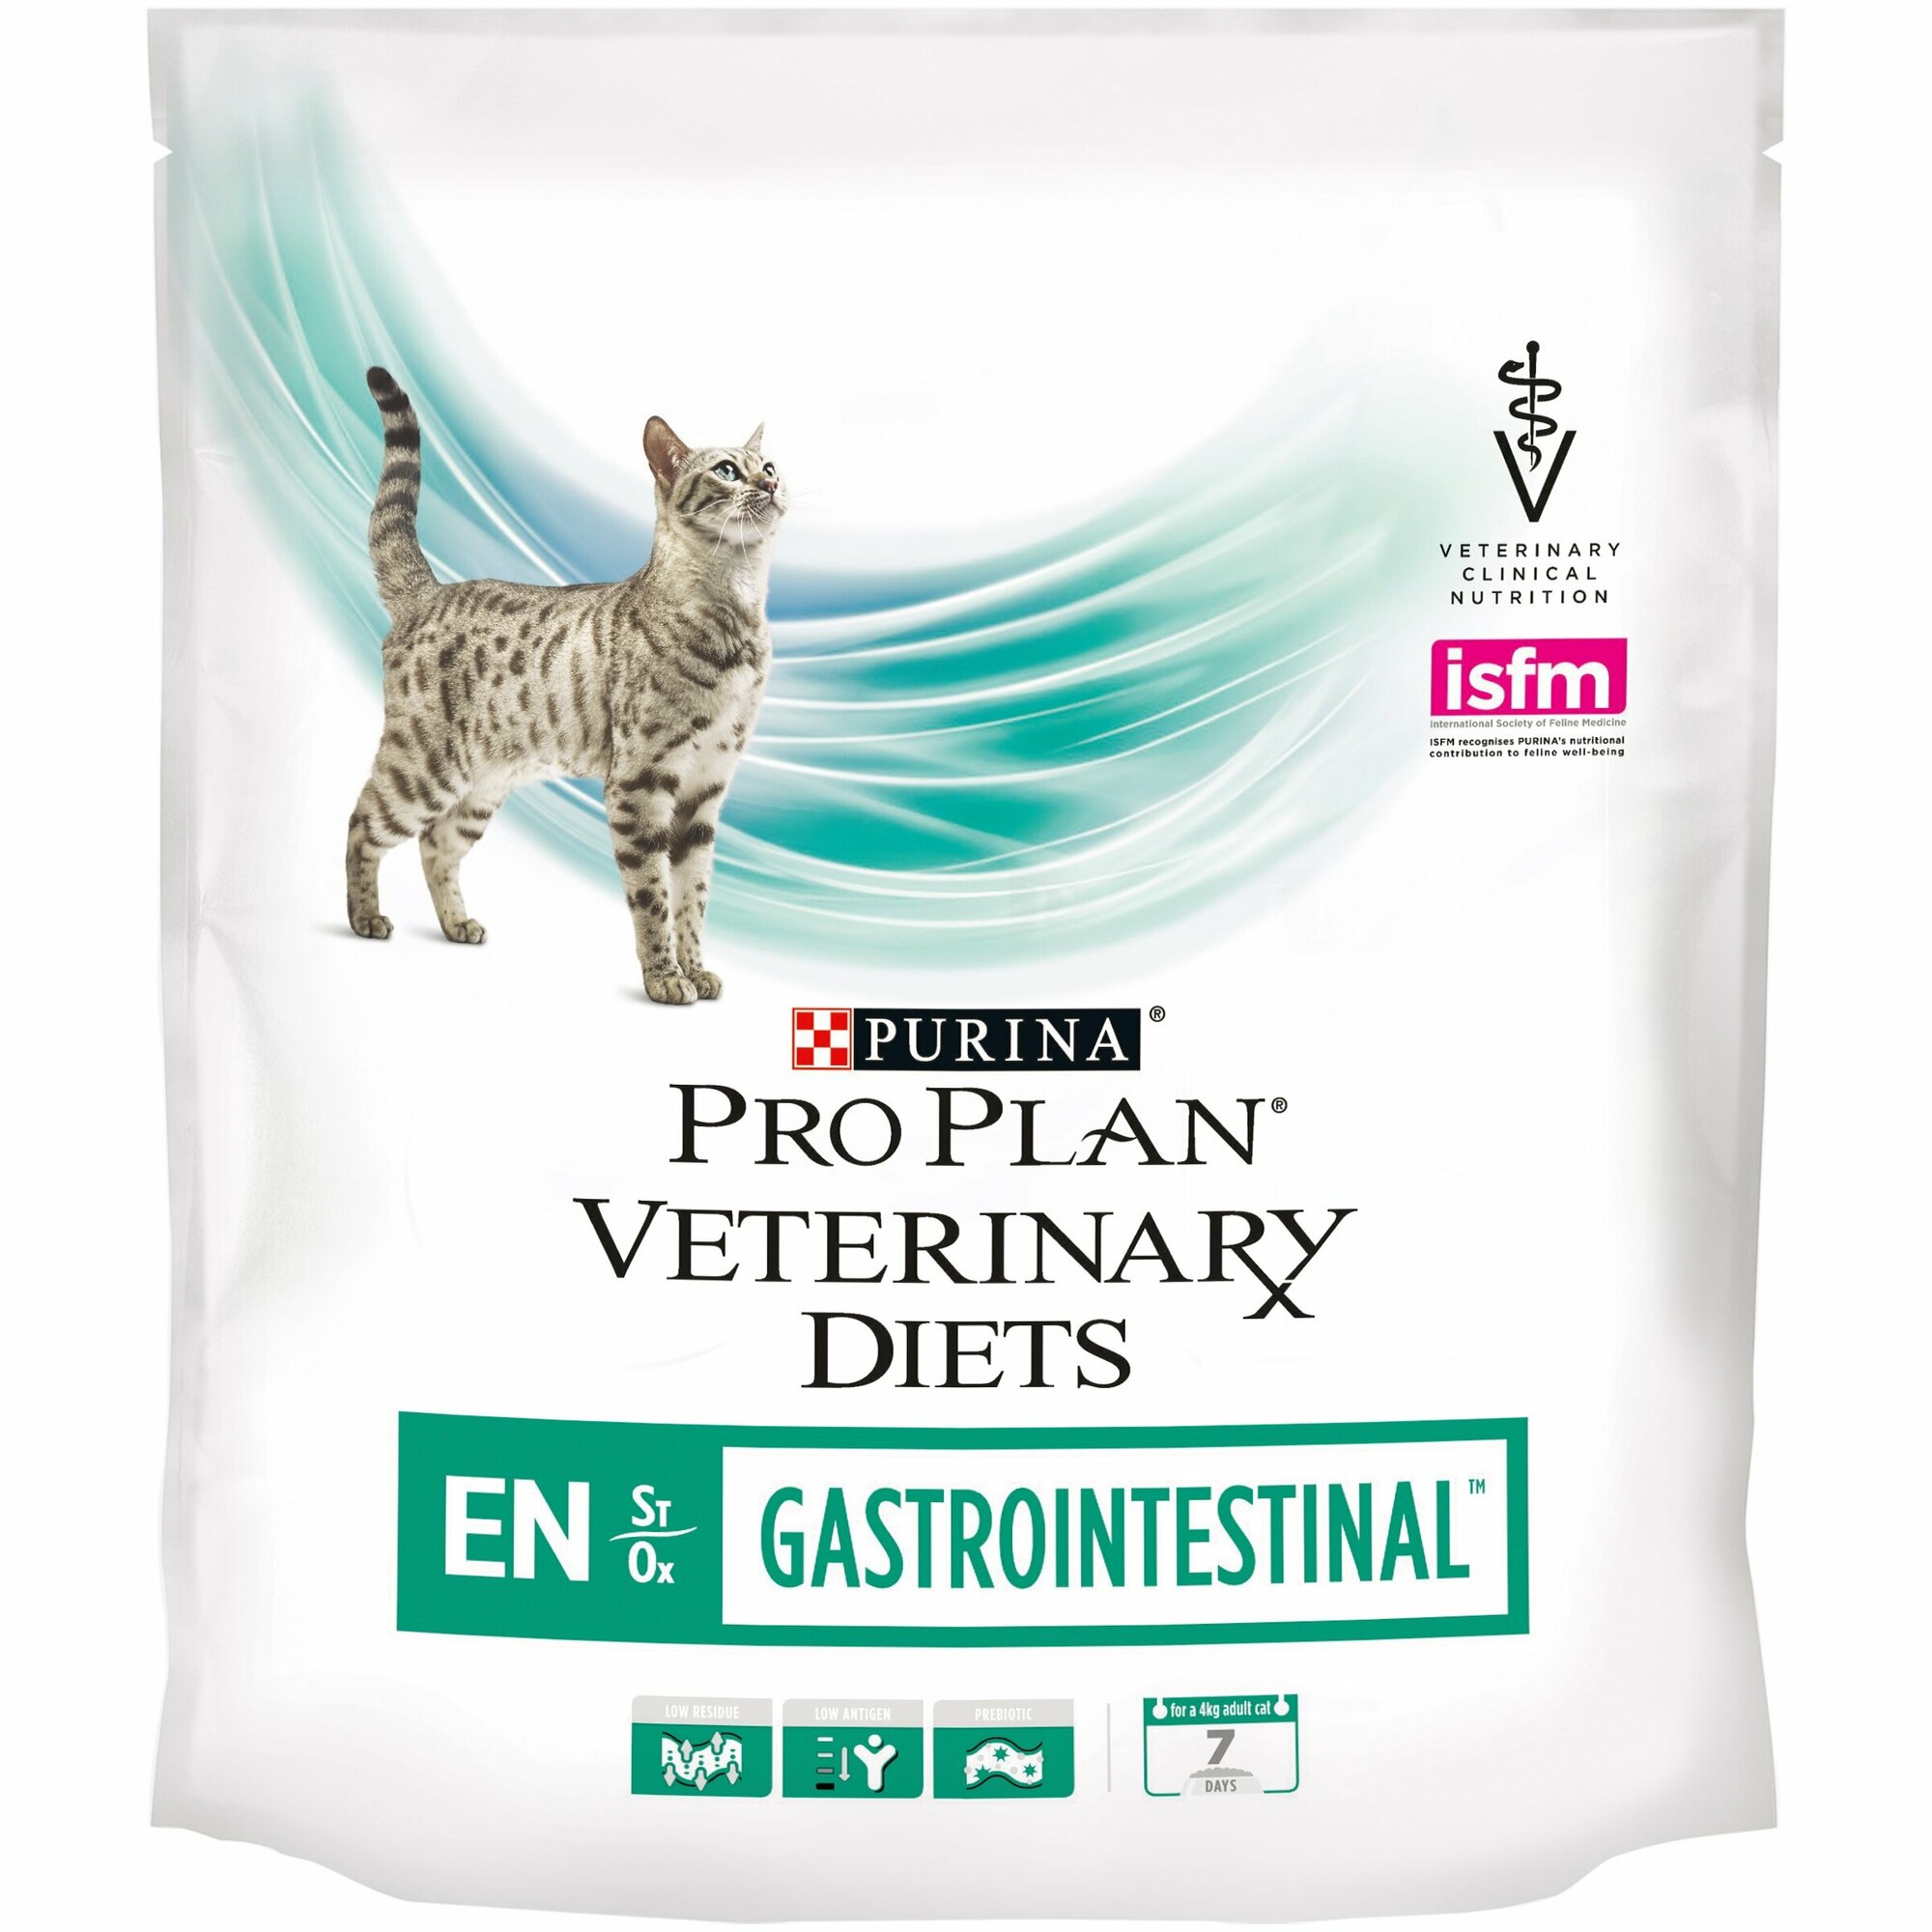 Pro Plan Veterinary Diets EN Gastrointestinal корм для кошек при патологии ЖКТ Диетический, 1,5 кг.